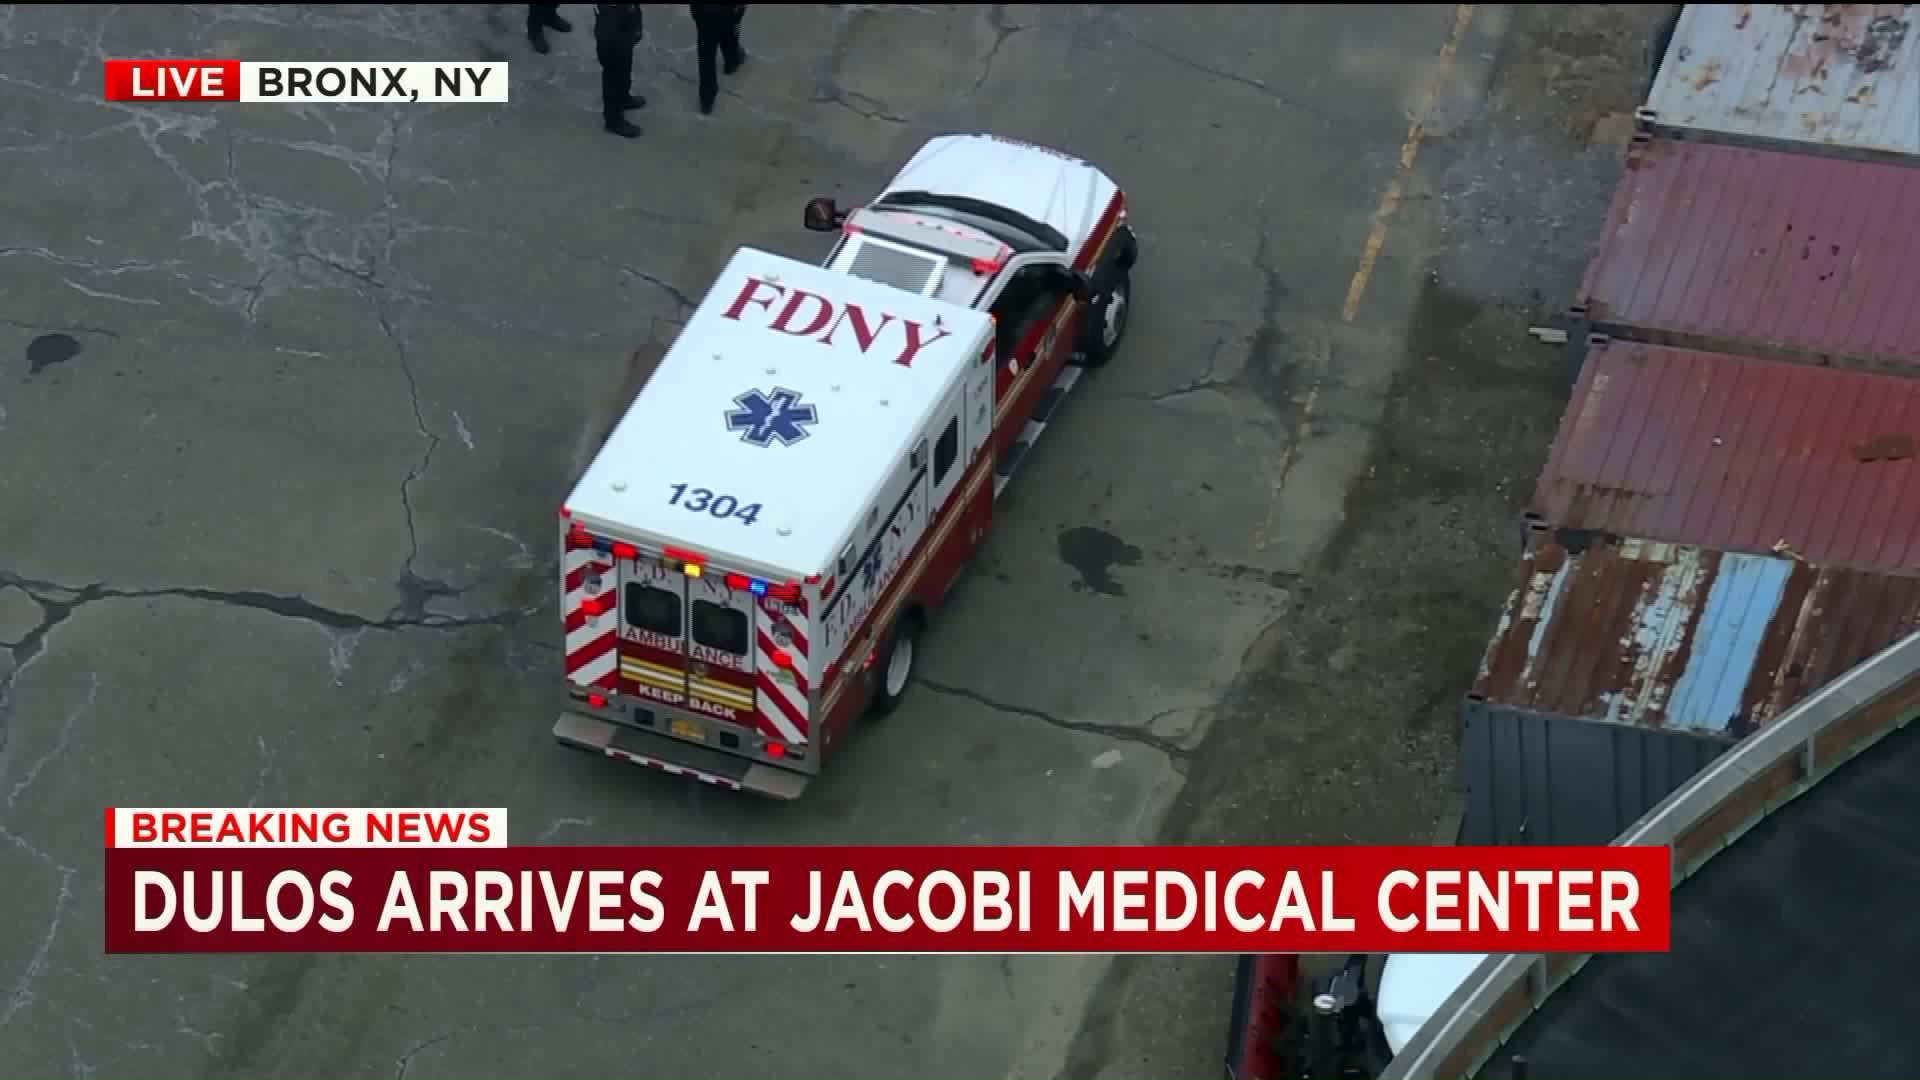 Fotis Dulos arriving at Jacobi Medical Center